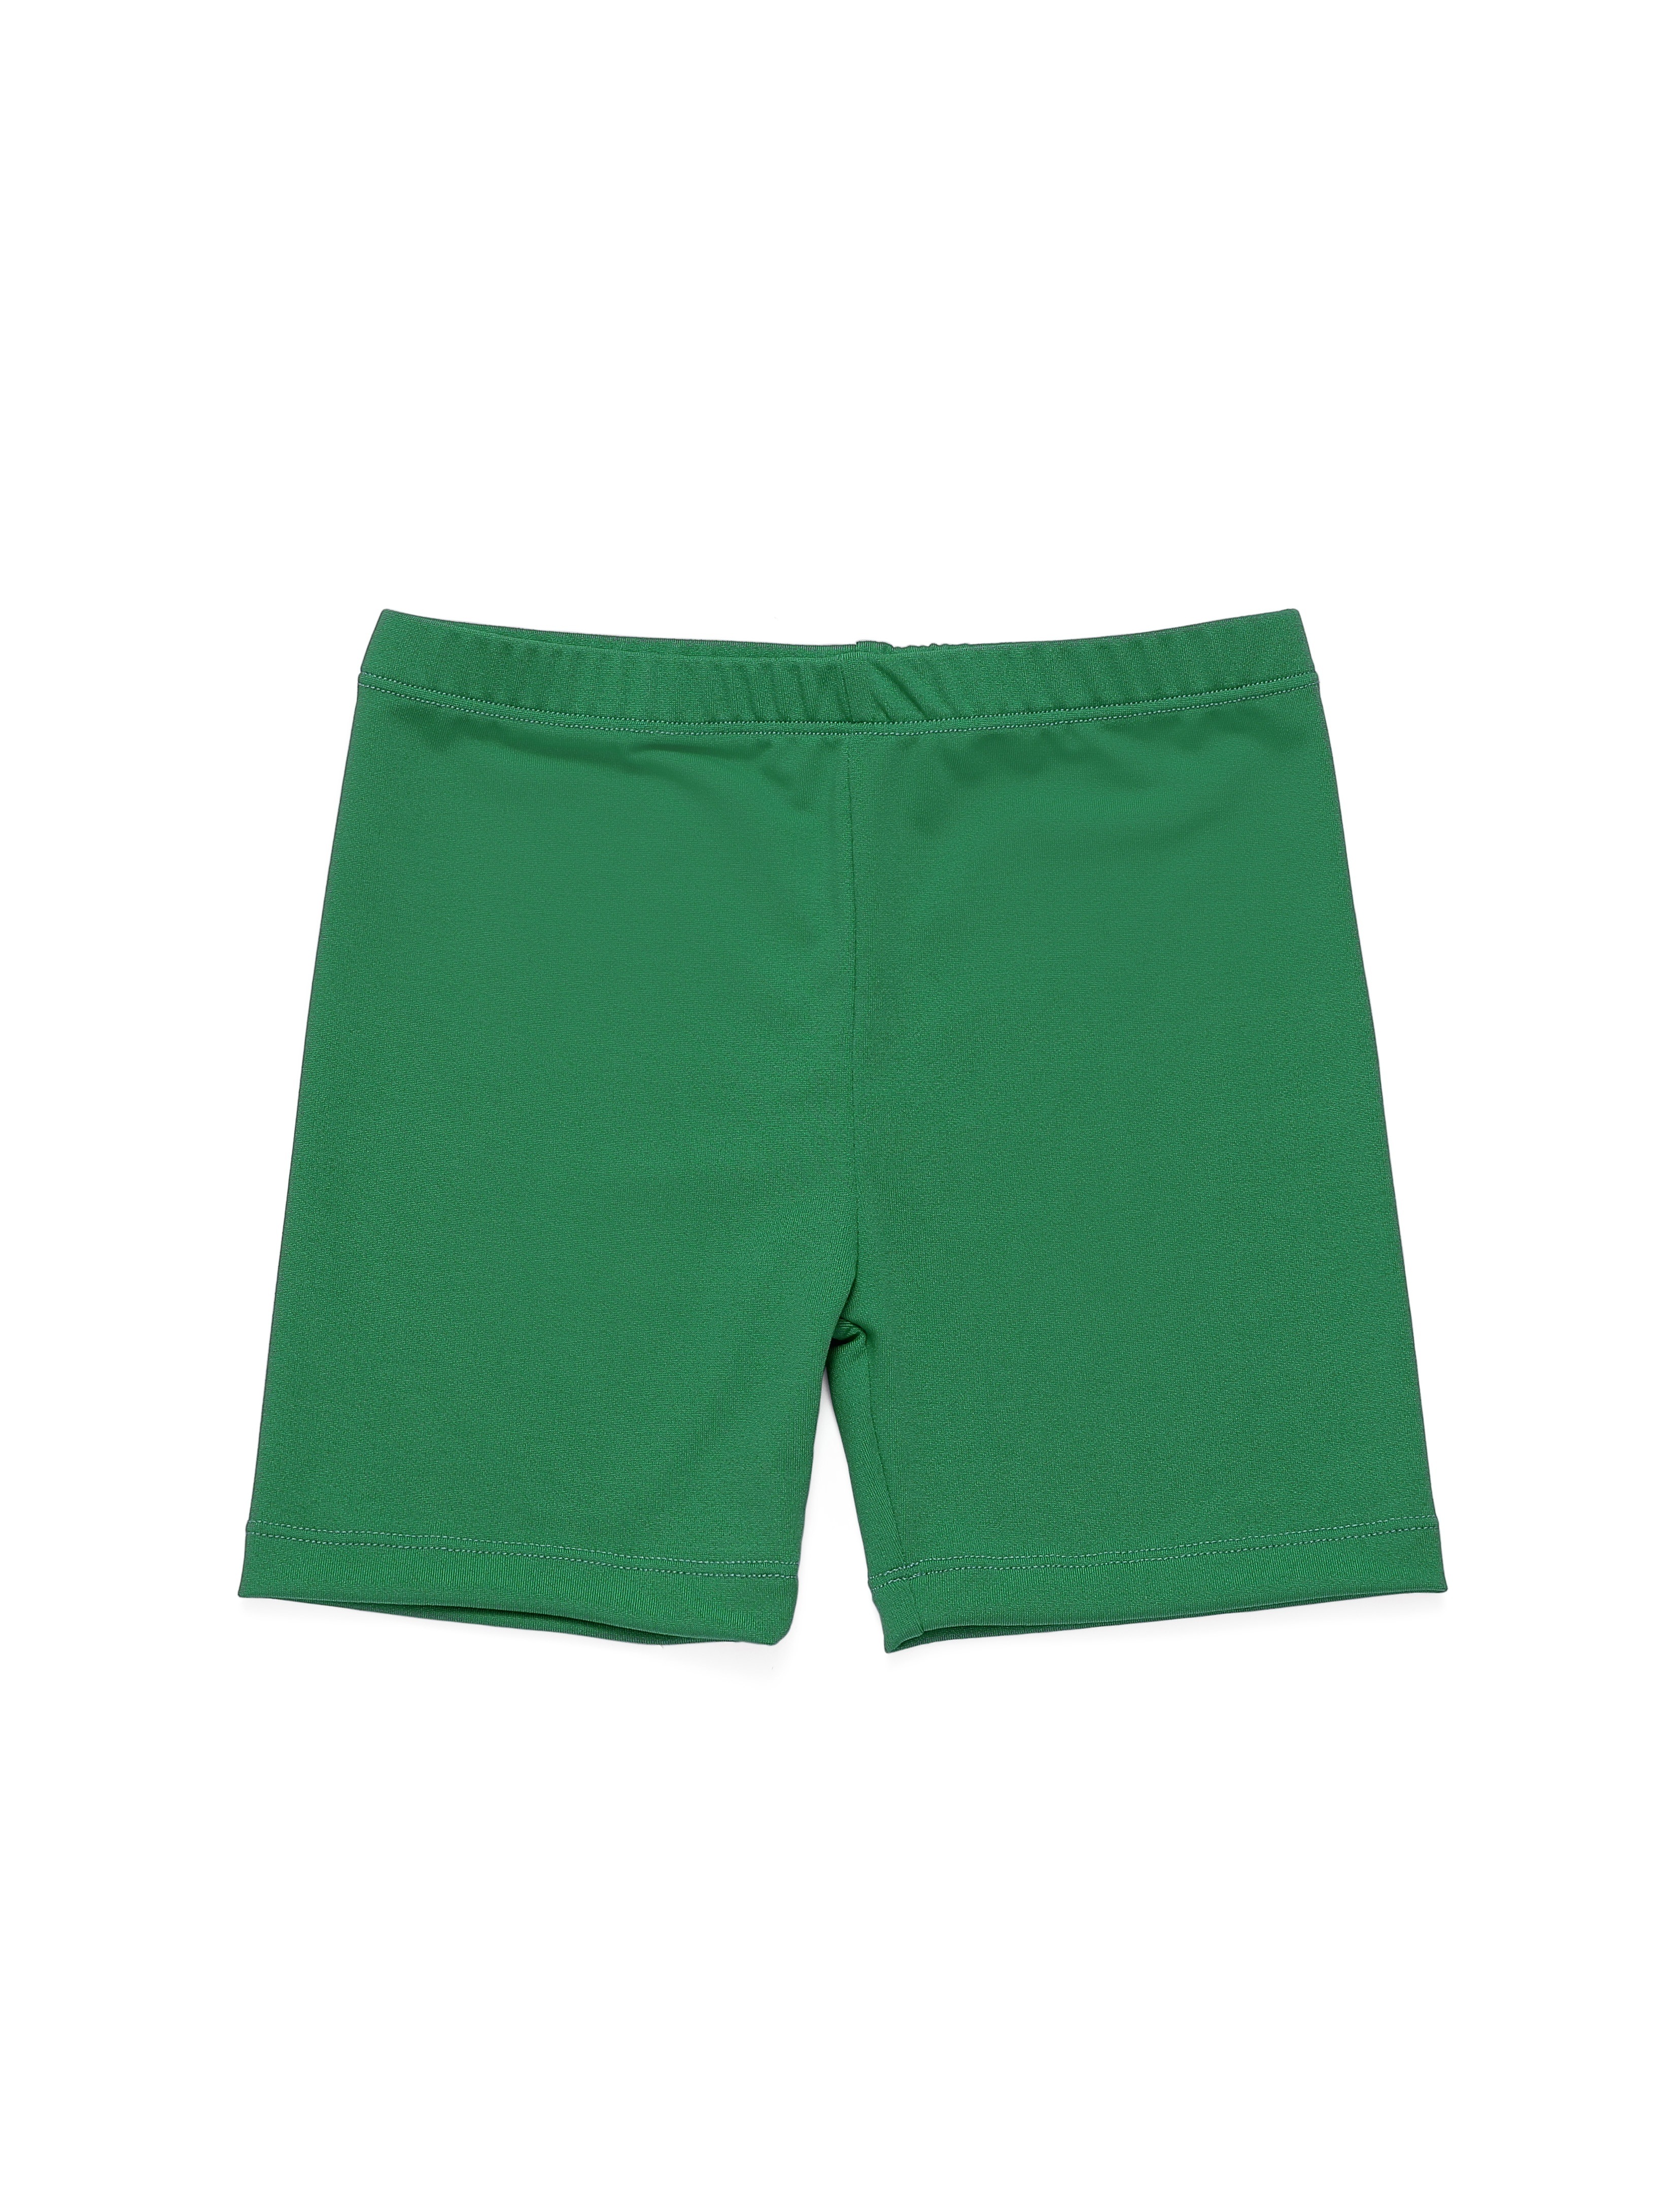 Custom Toddler Shorts for Teenage Short Pants Girls Boys Summer